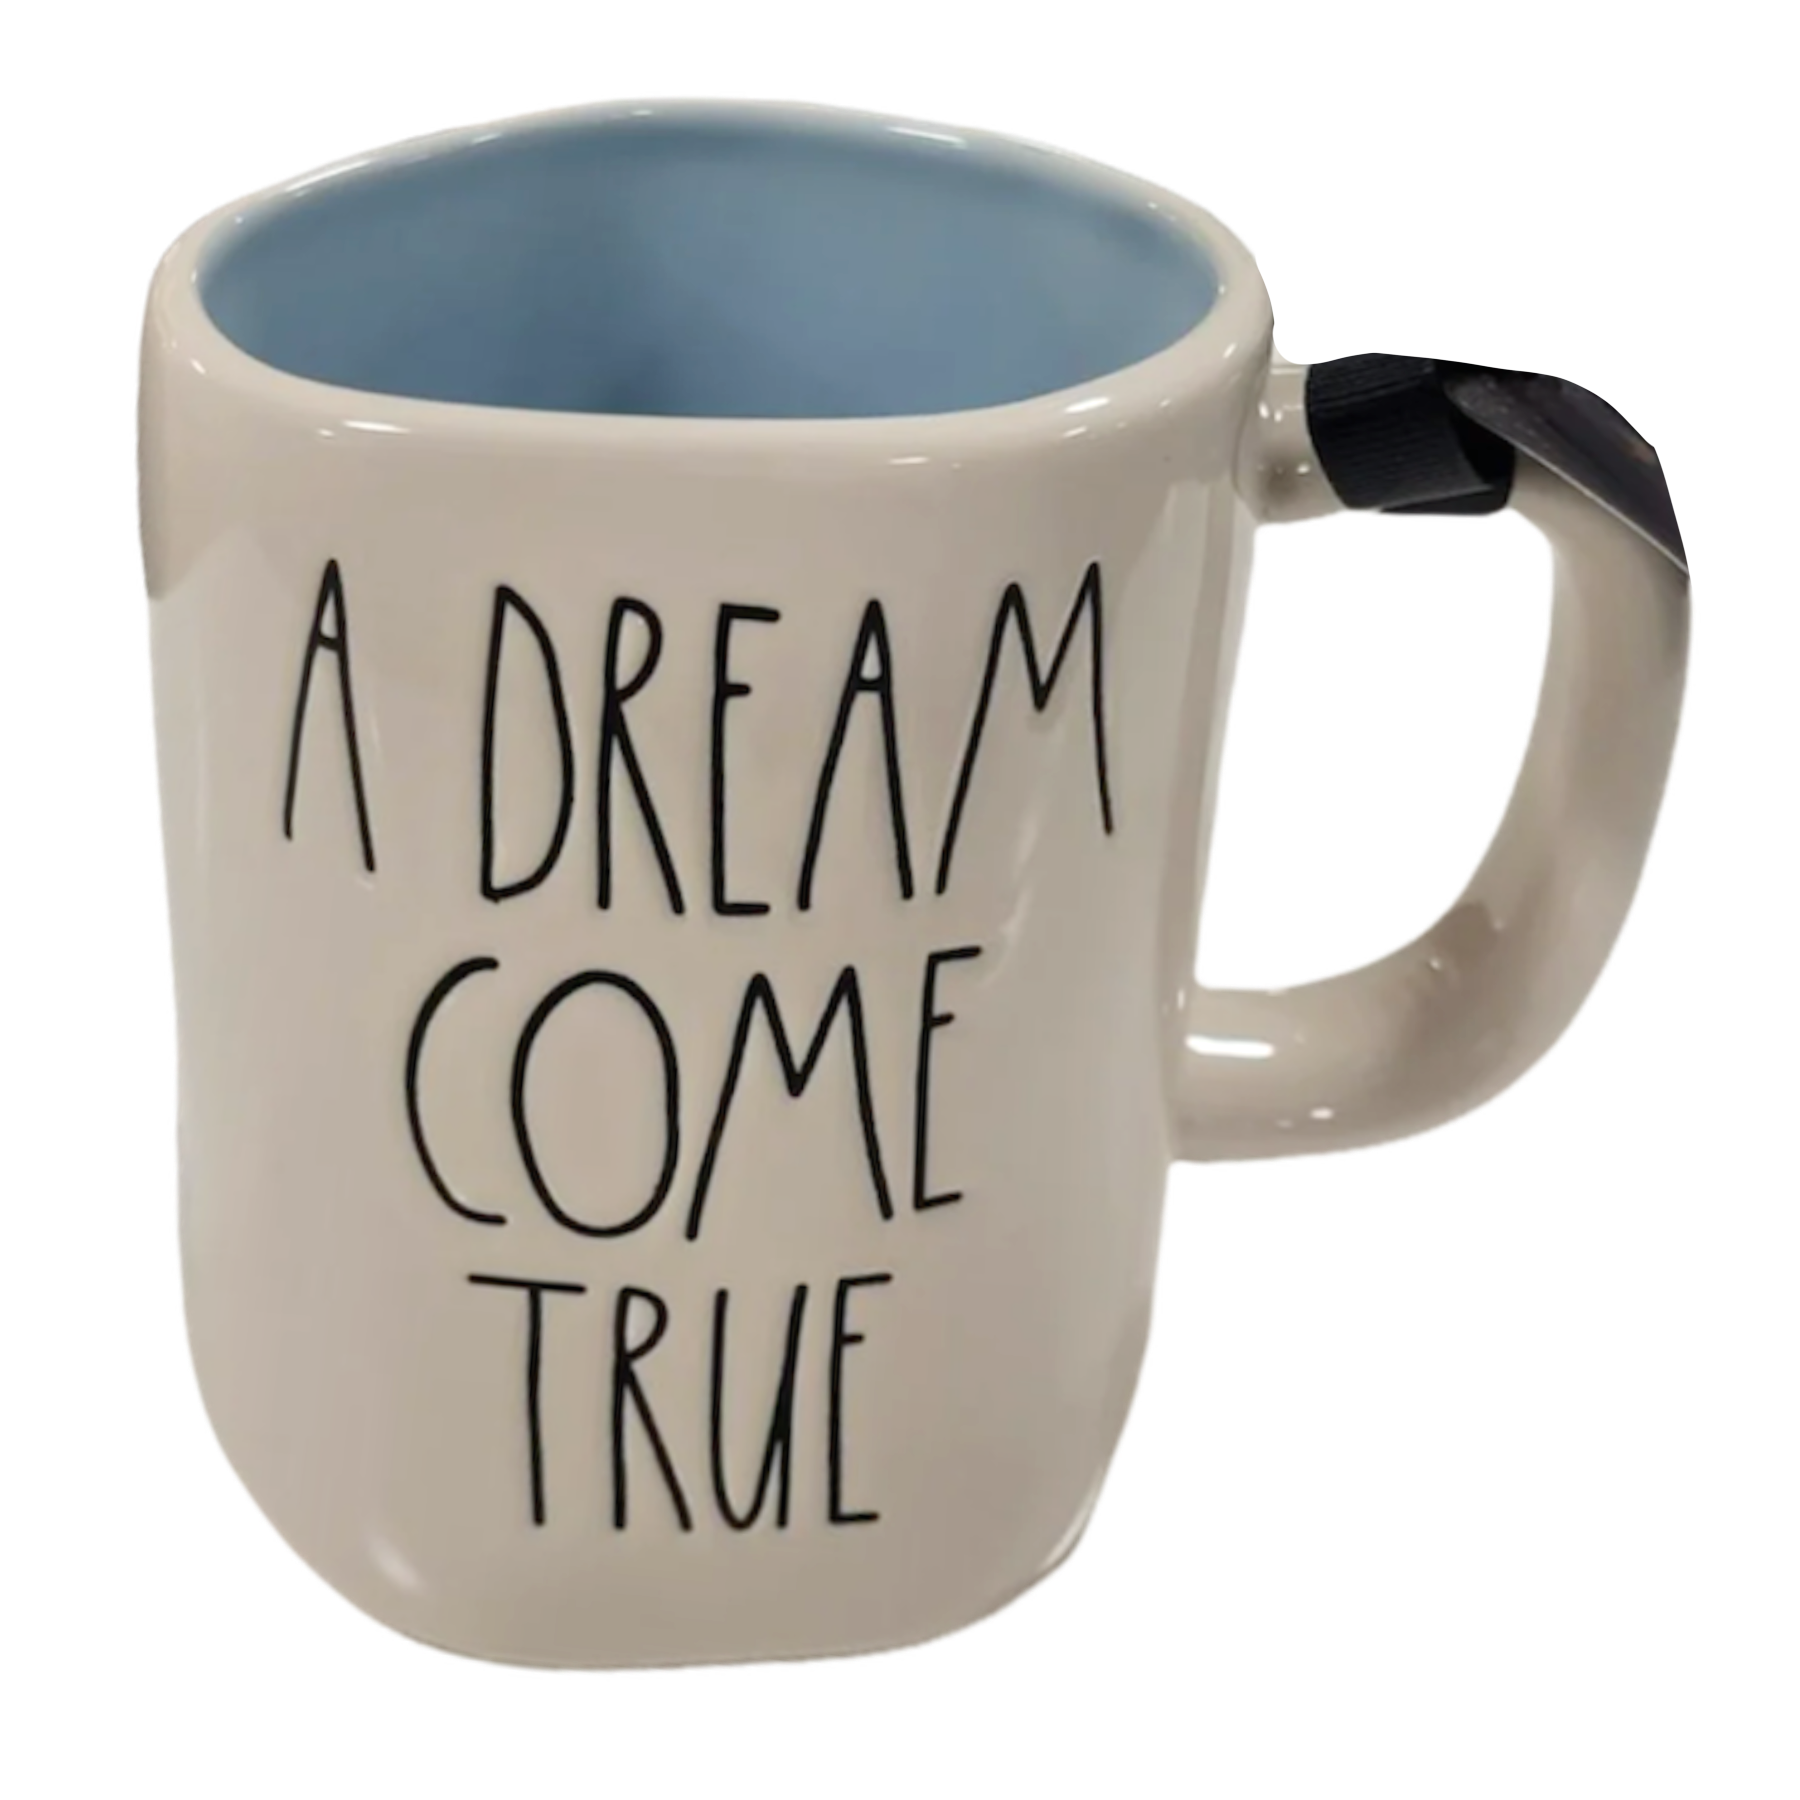 New Rae Dunn Disney Cinderella movie coffee mug A DREAM COME TRUE